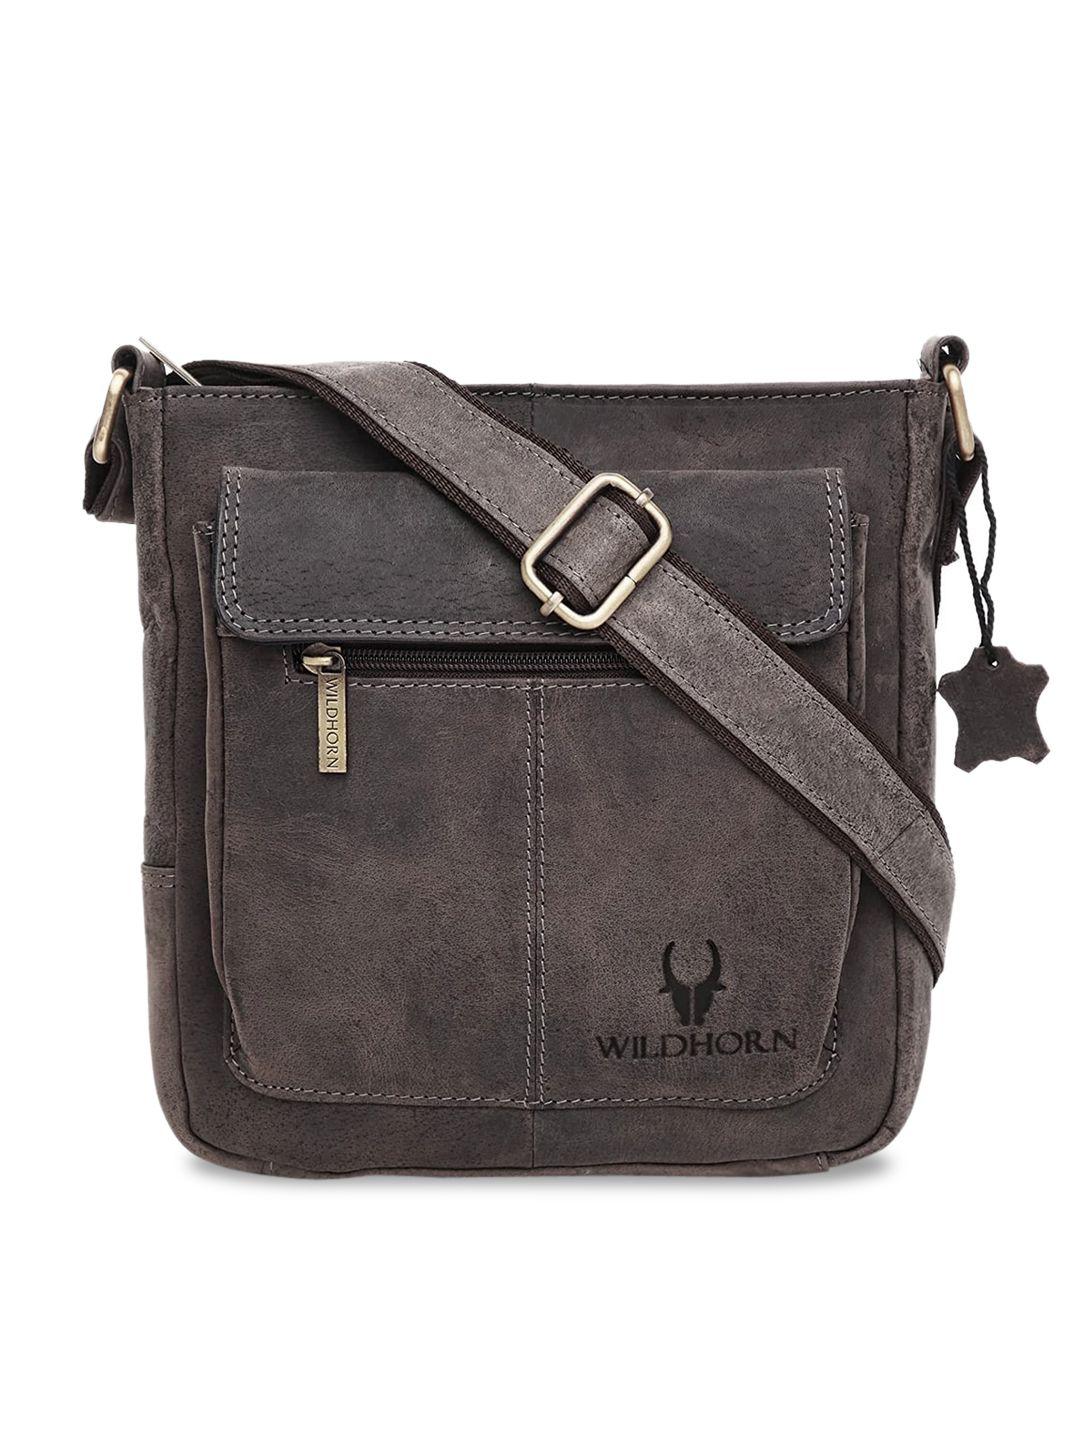 wildhorn grey textured leather bucket sling bag